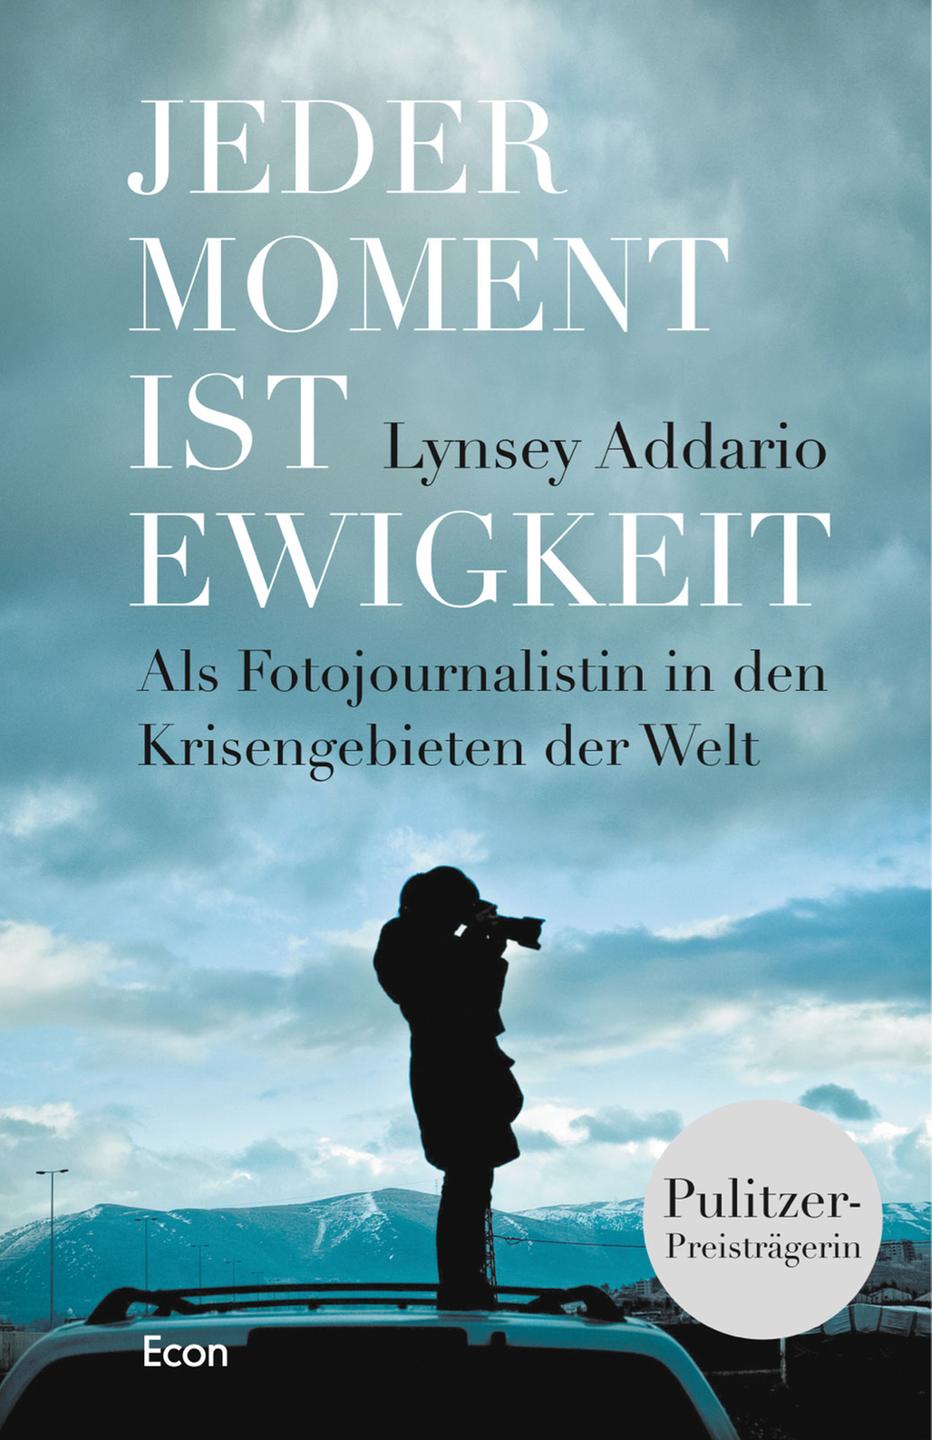 Cover - Lynsey Addario: "Jeder Moment ist Ewigkeit" 